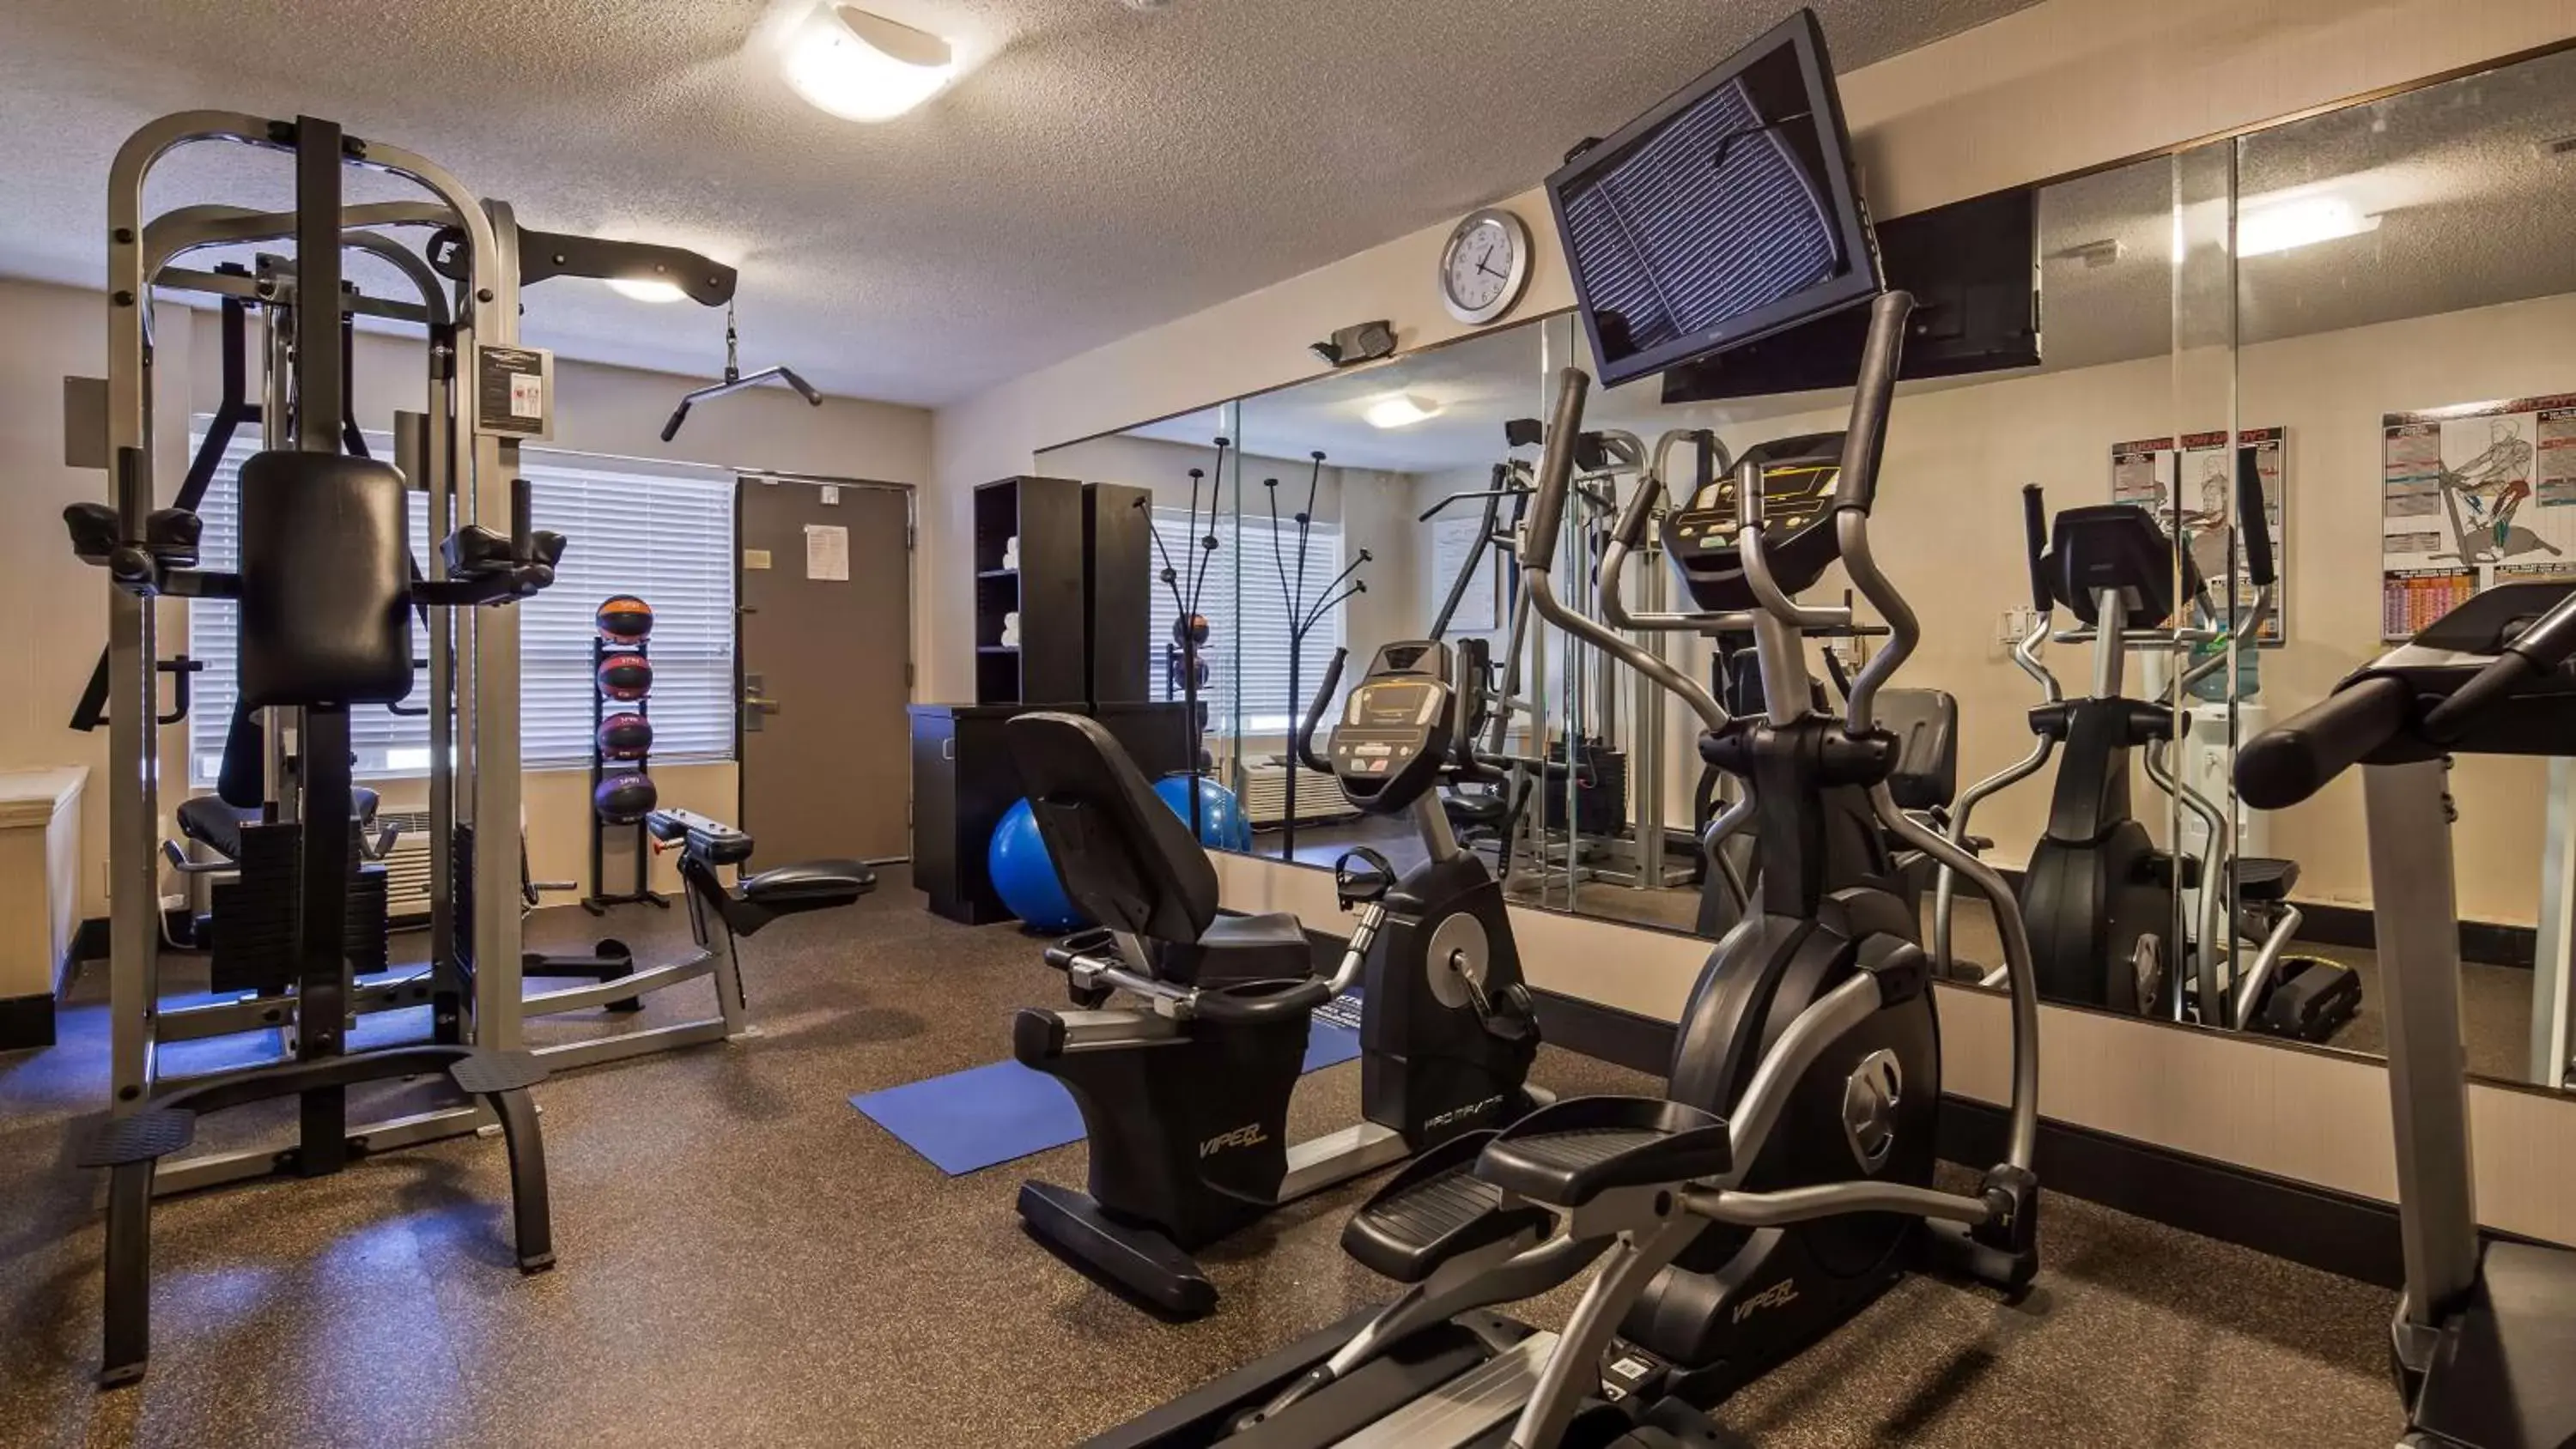 Fitness centre/facilities, Fitness Center/Facilities in Best Western Gateway Adirondack Inn